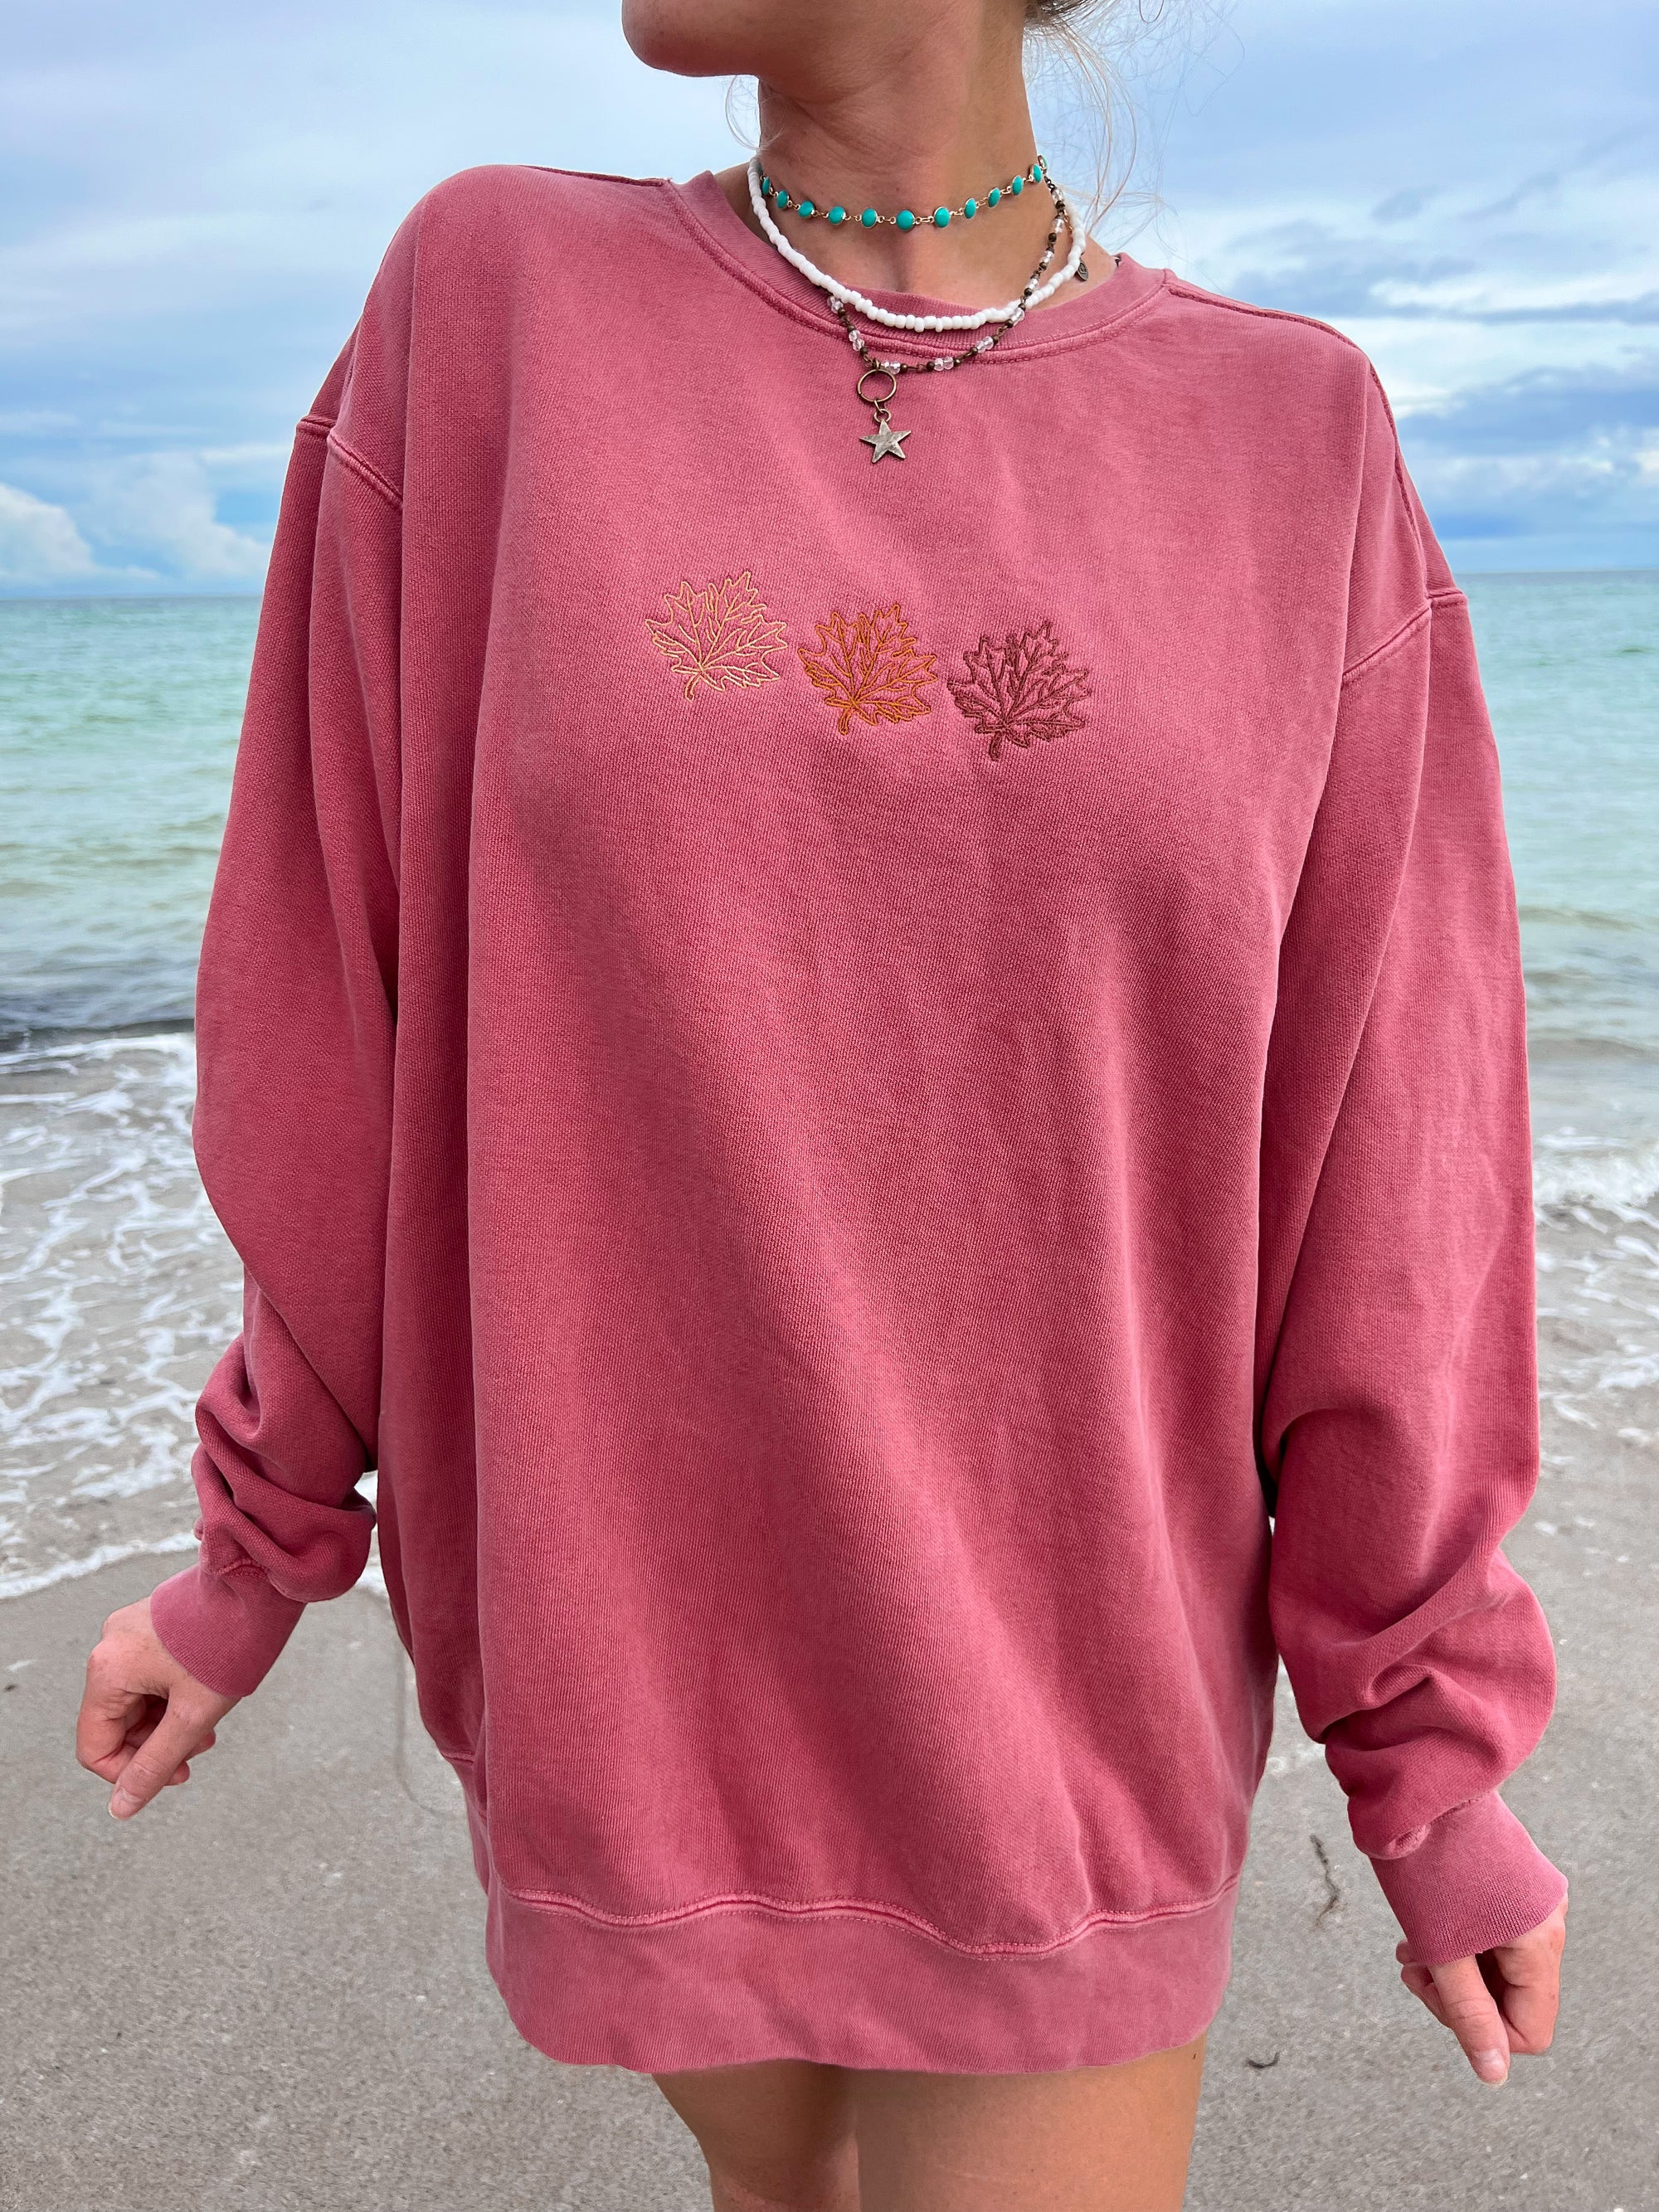 Embroider Fall Leaves Sweatshirt